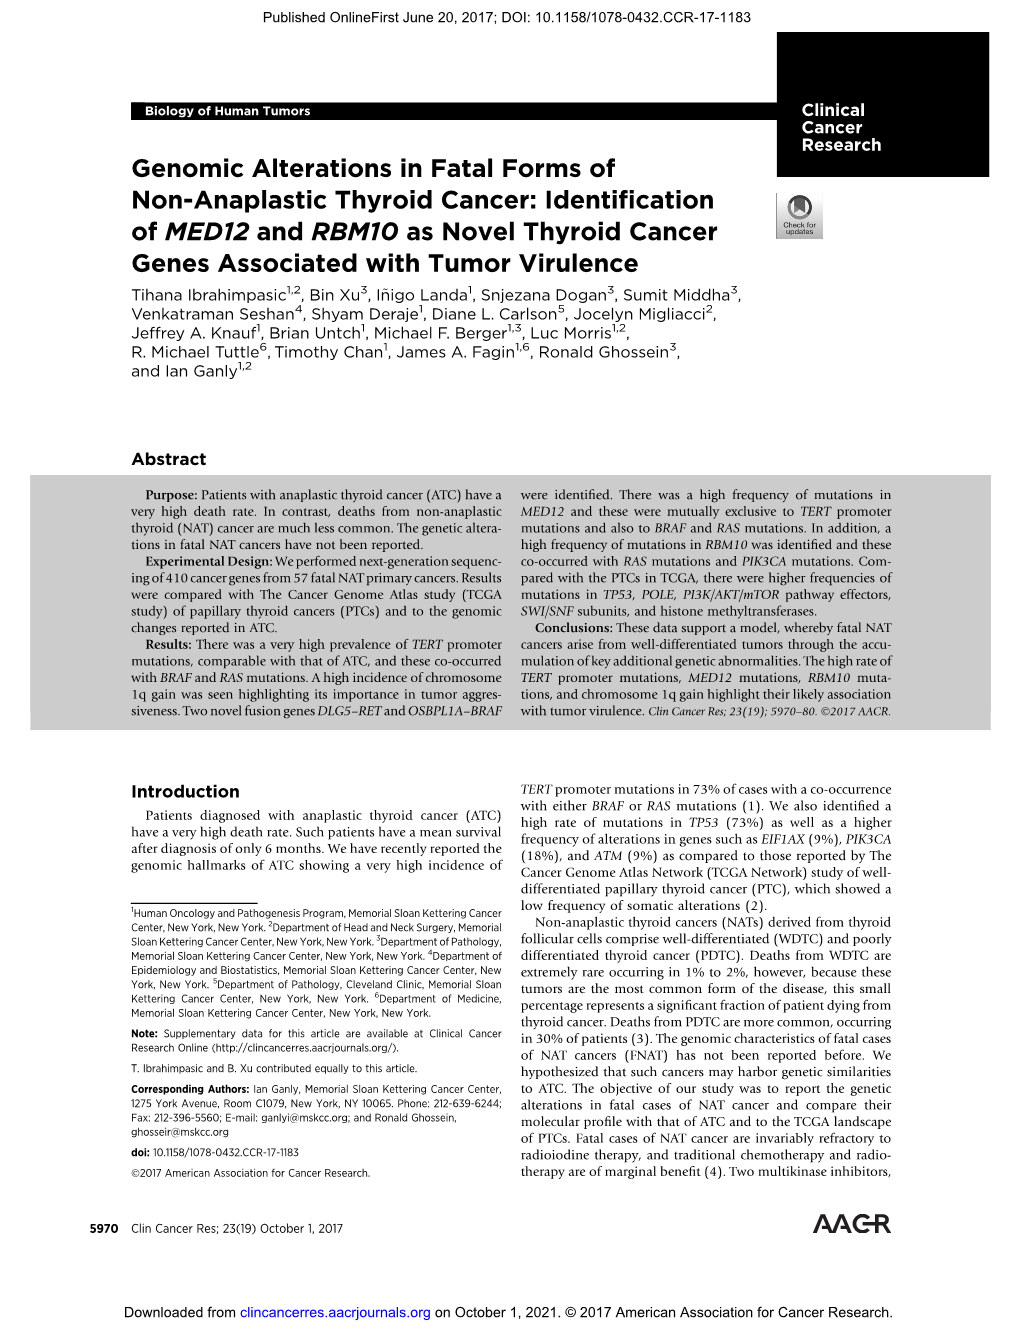 Identification of MED12 and RBM10 As Novel Thyroid Cancer Genes Associated with Tumor Virulence